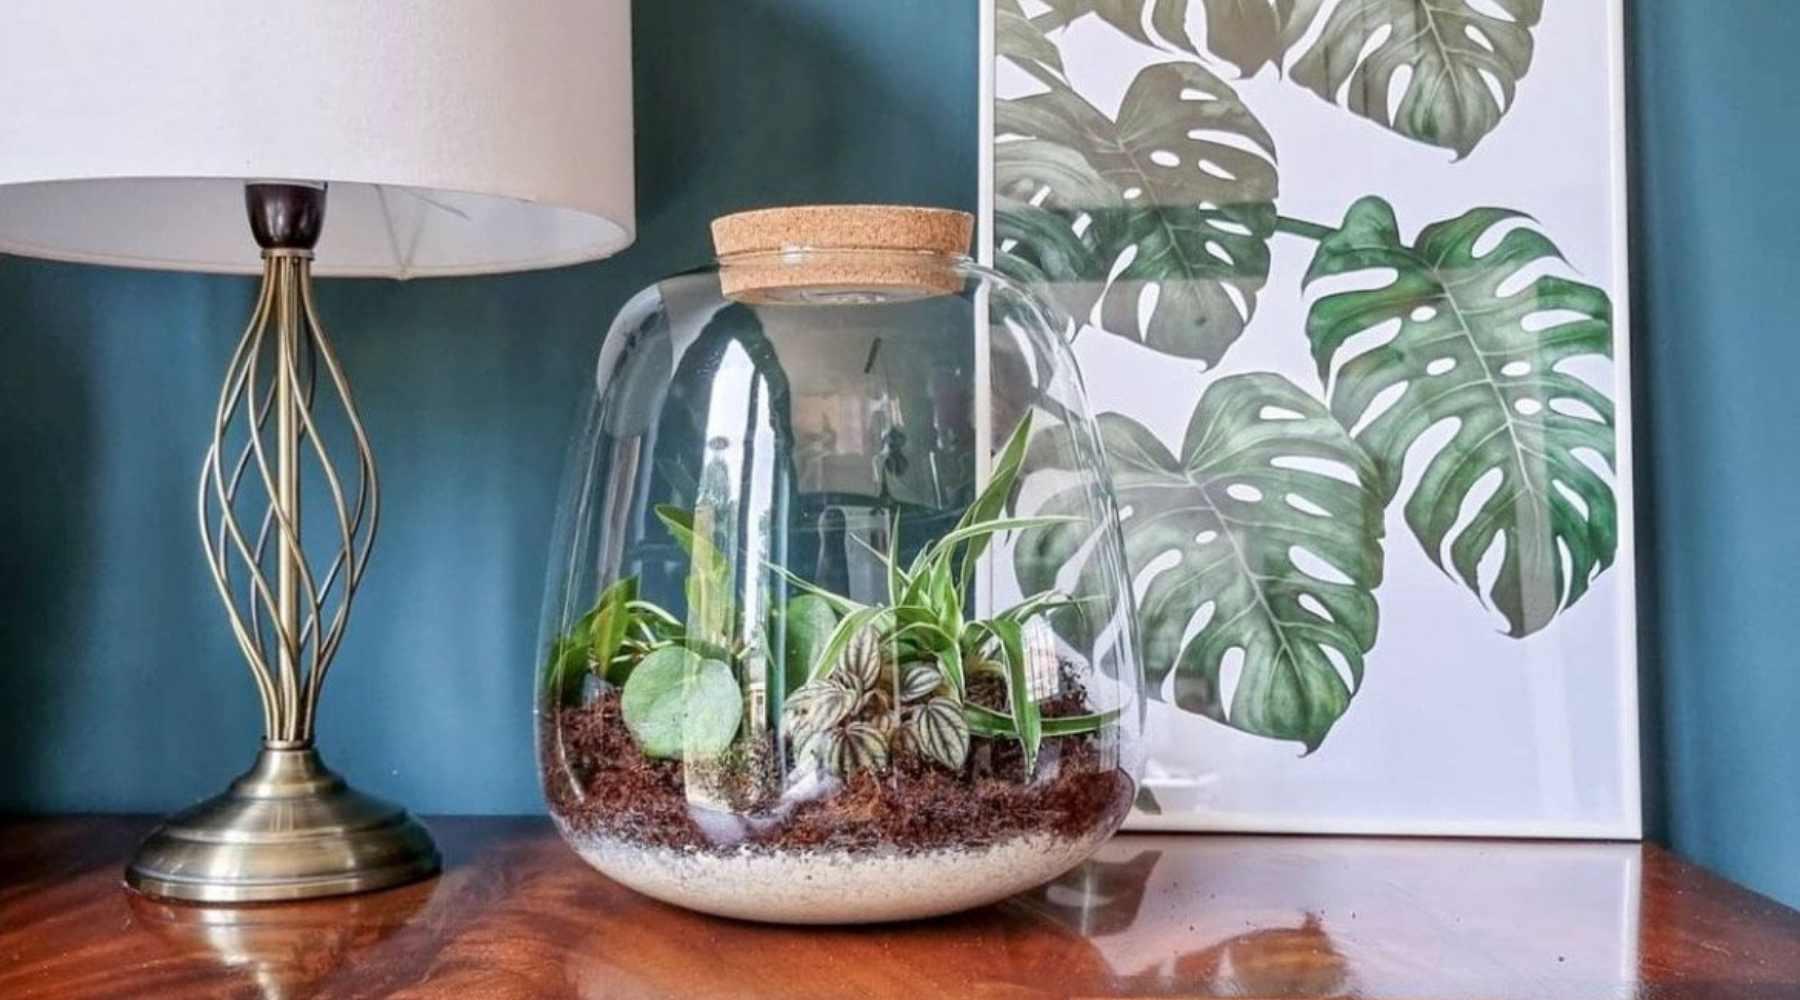 Houseplant Hobbyist on X: What do you think of this terrarium